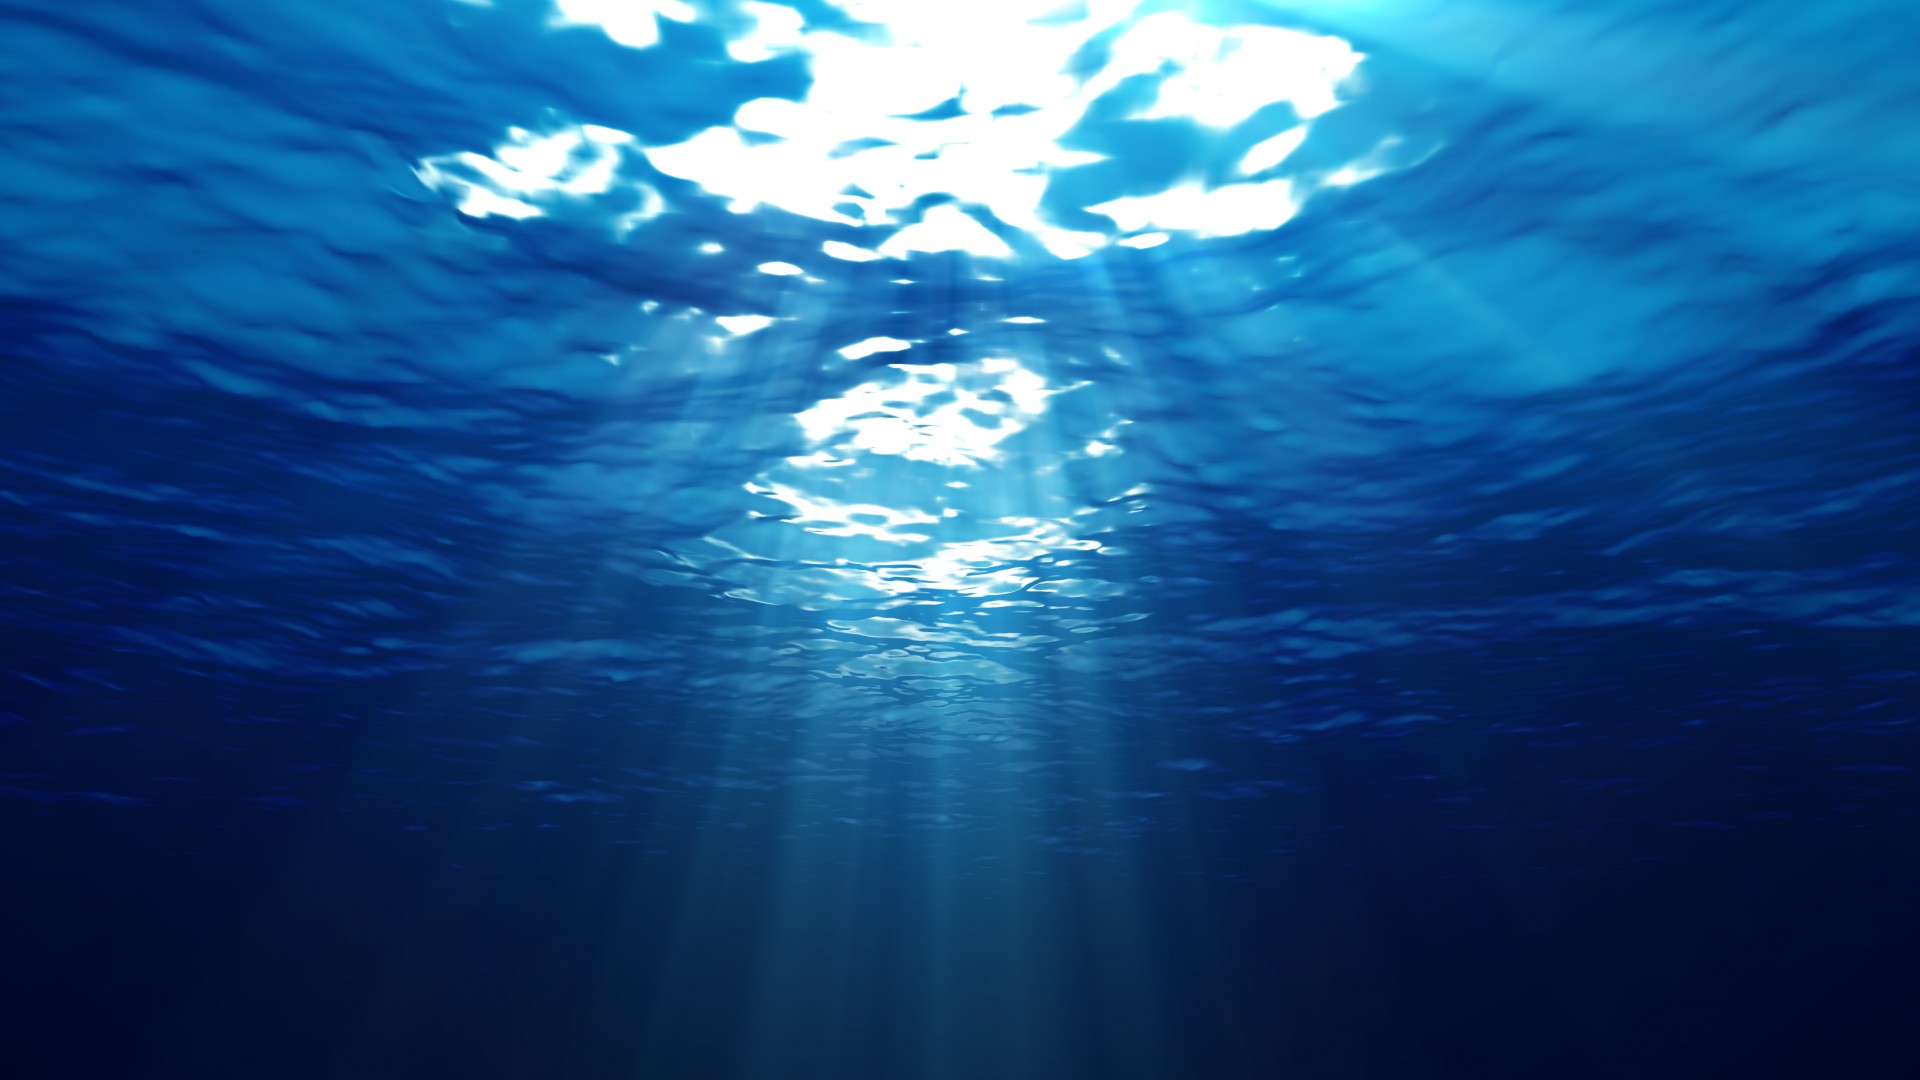 Виндовс, 4k, 5k, 8k, океан, под водой, глубина, Windows, 4k, 5k wallpaper, 8k, ocean, underwater, deep (horizontal)